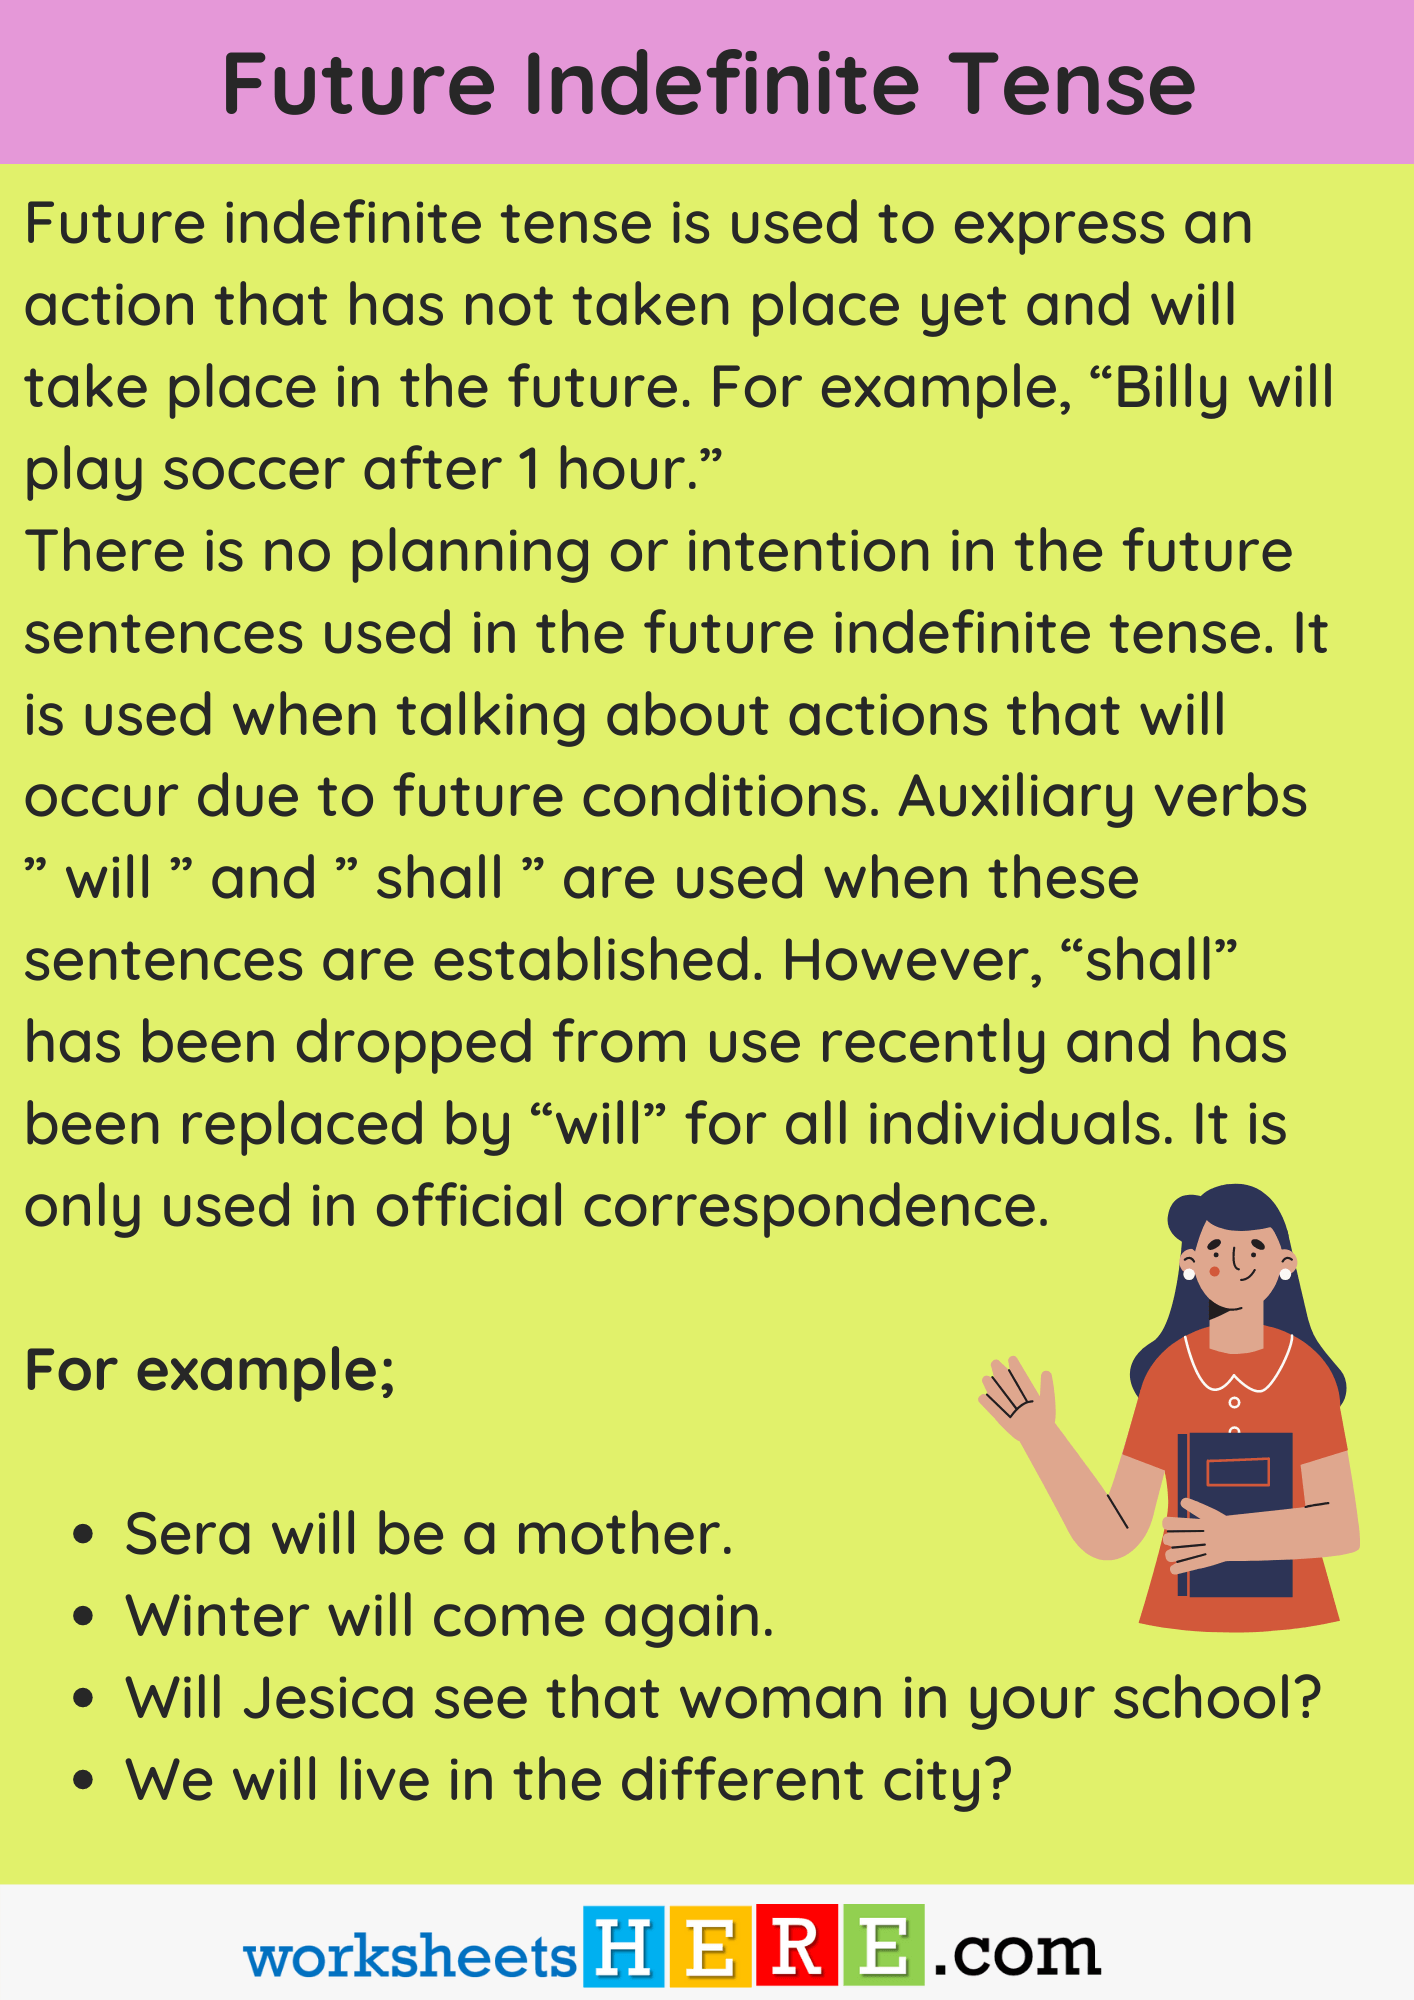 Future Indefinite Tense Definition and Example Sentences PDF Worksheet